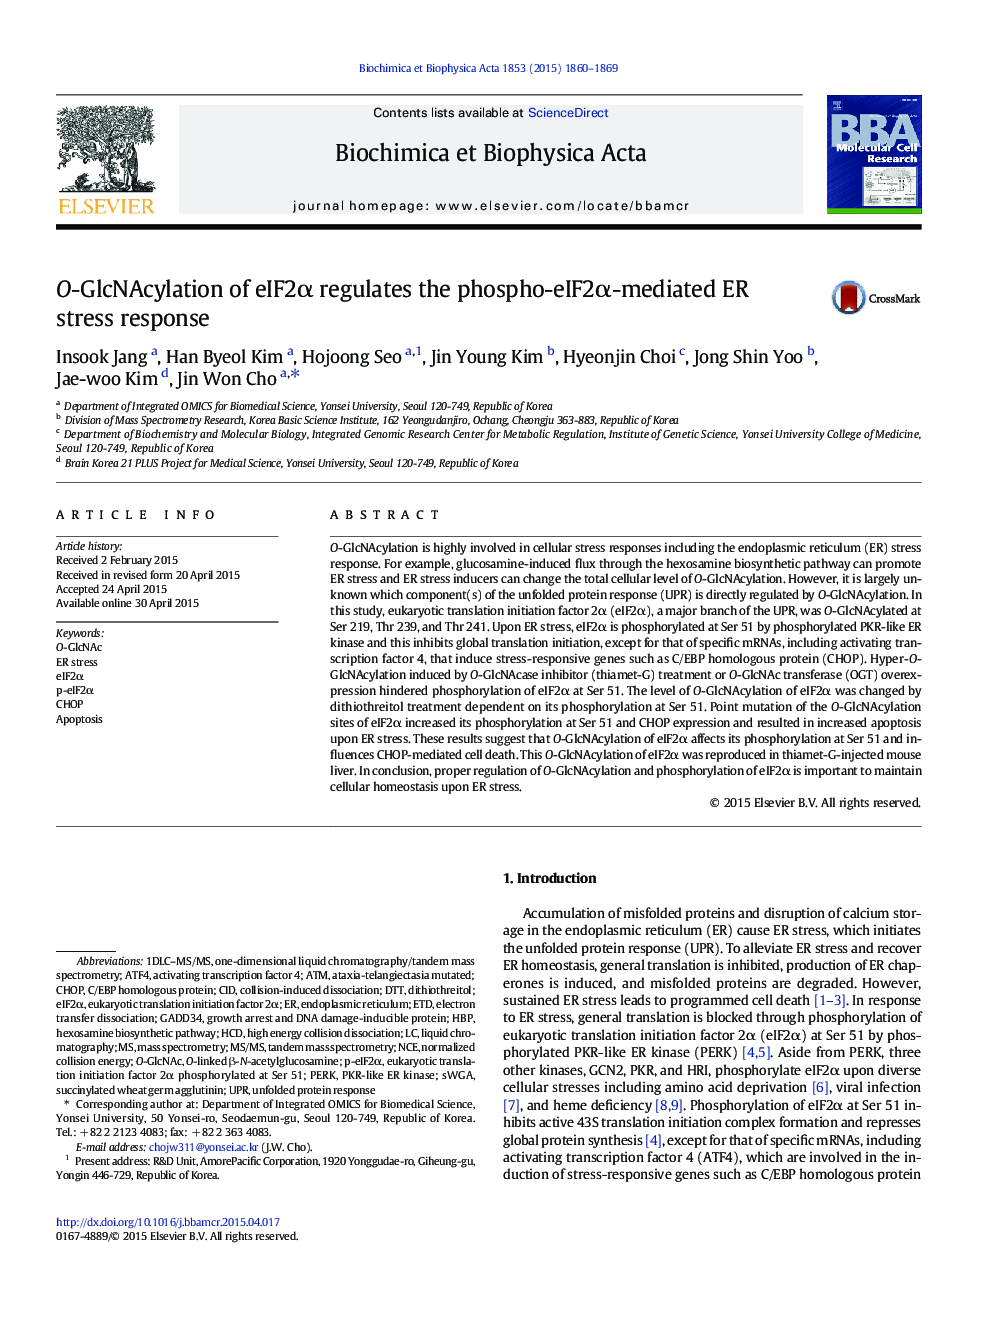 O-GlcNAcylation of eIF2α regulates the phospho-eIF2α-mediated ER stress response